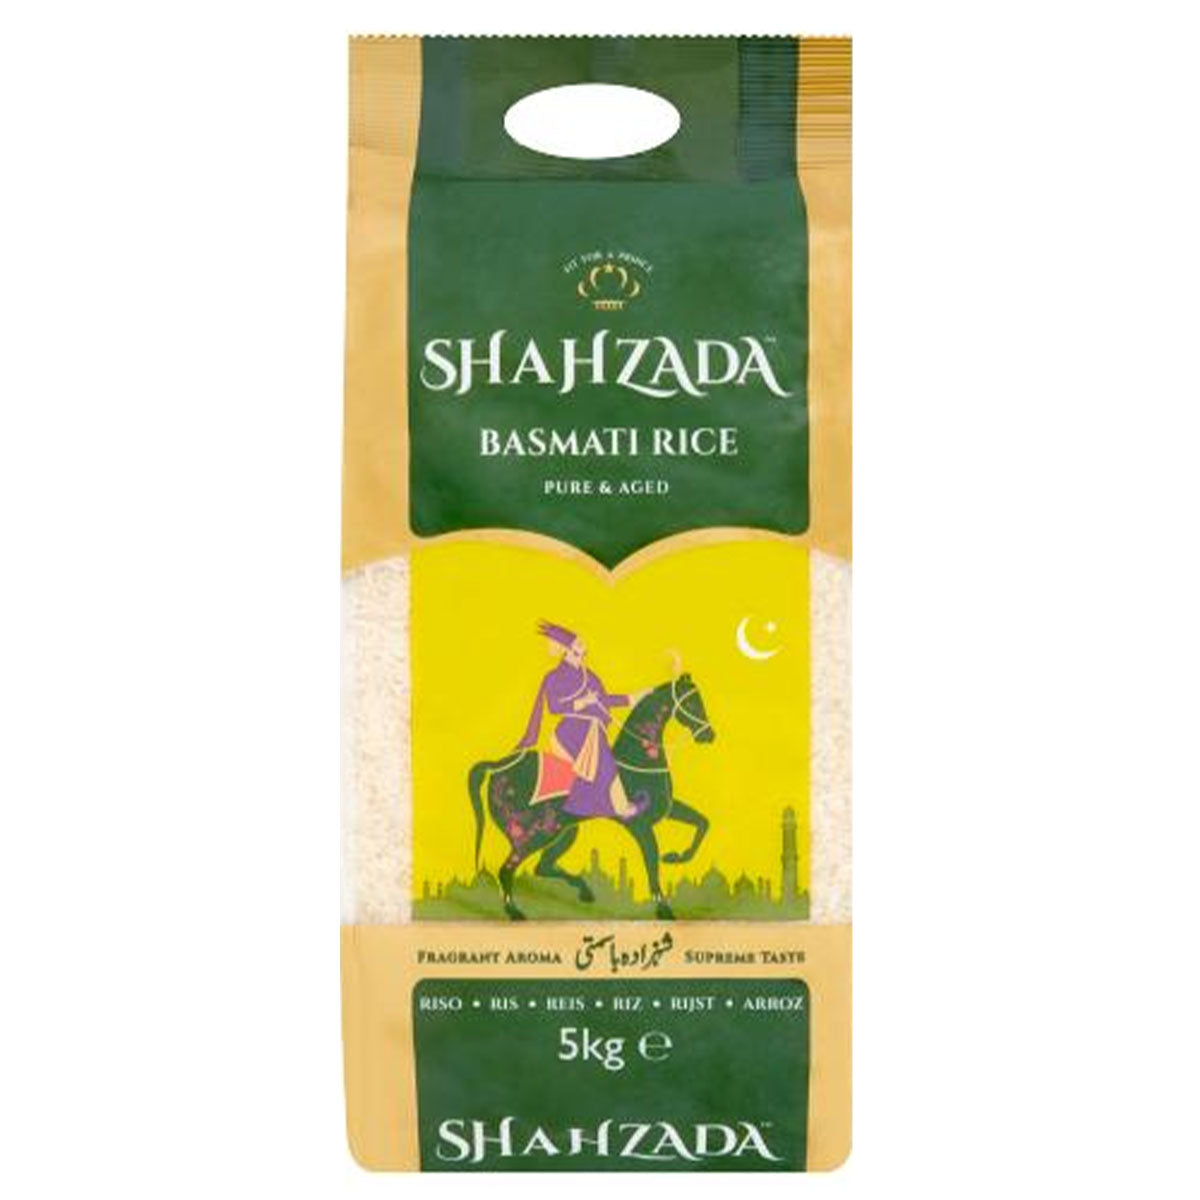 Shahzada - Basmati Rice - 5kg - Continental Food Store